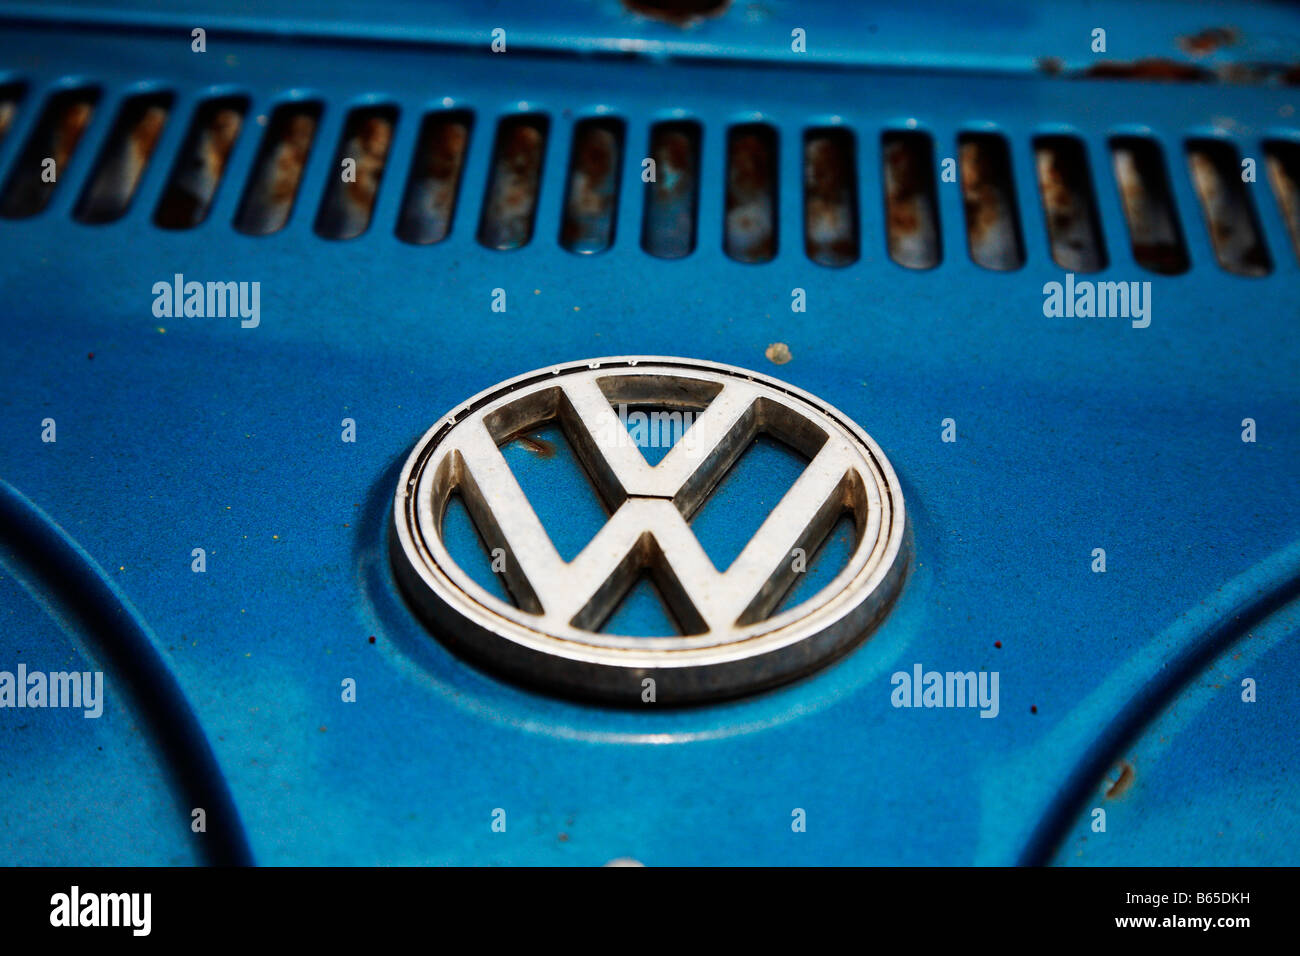 Volkswagen badge on bonnet of VW beetle car Stock Photo